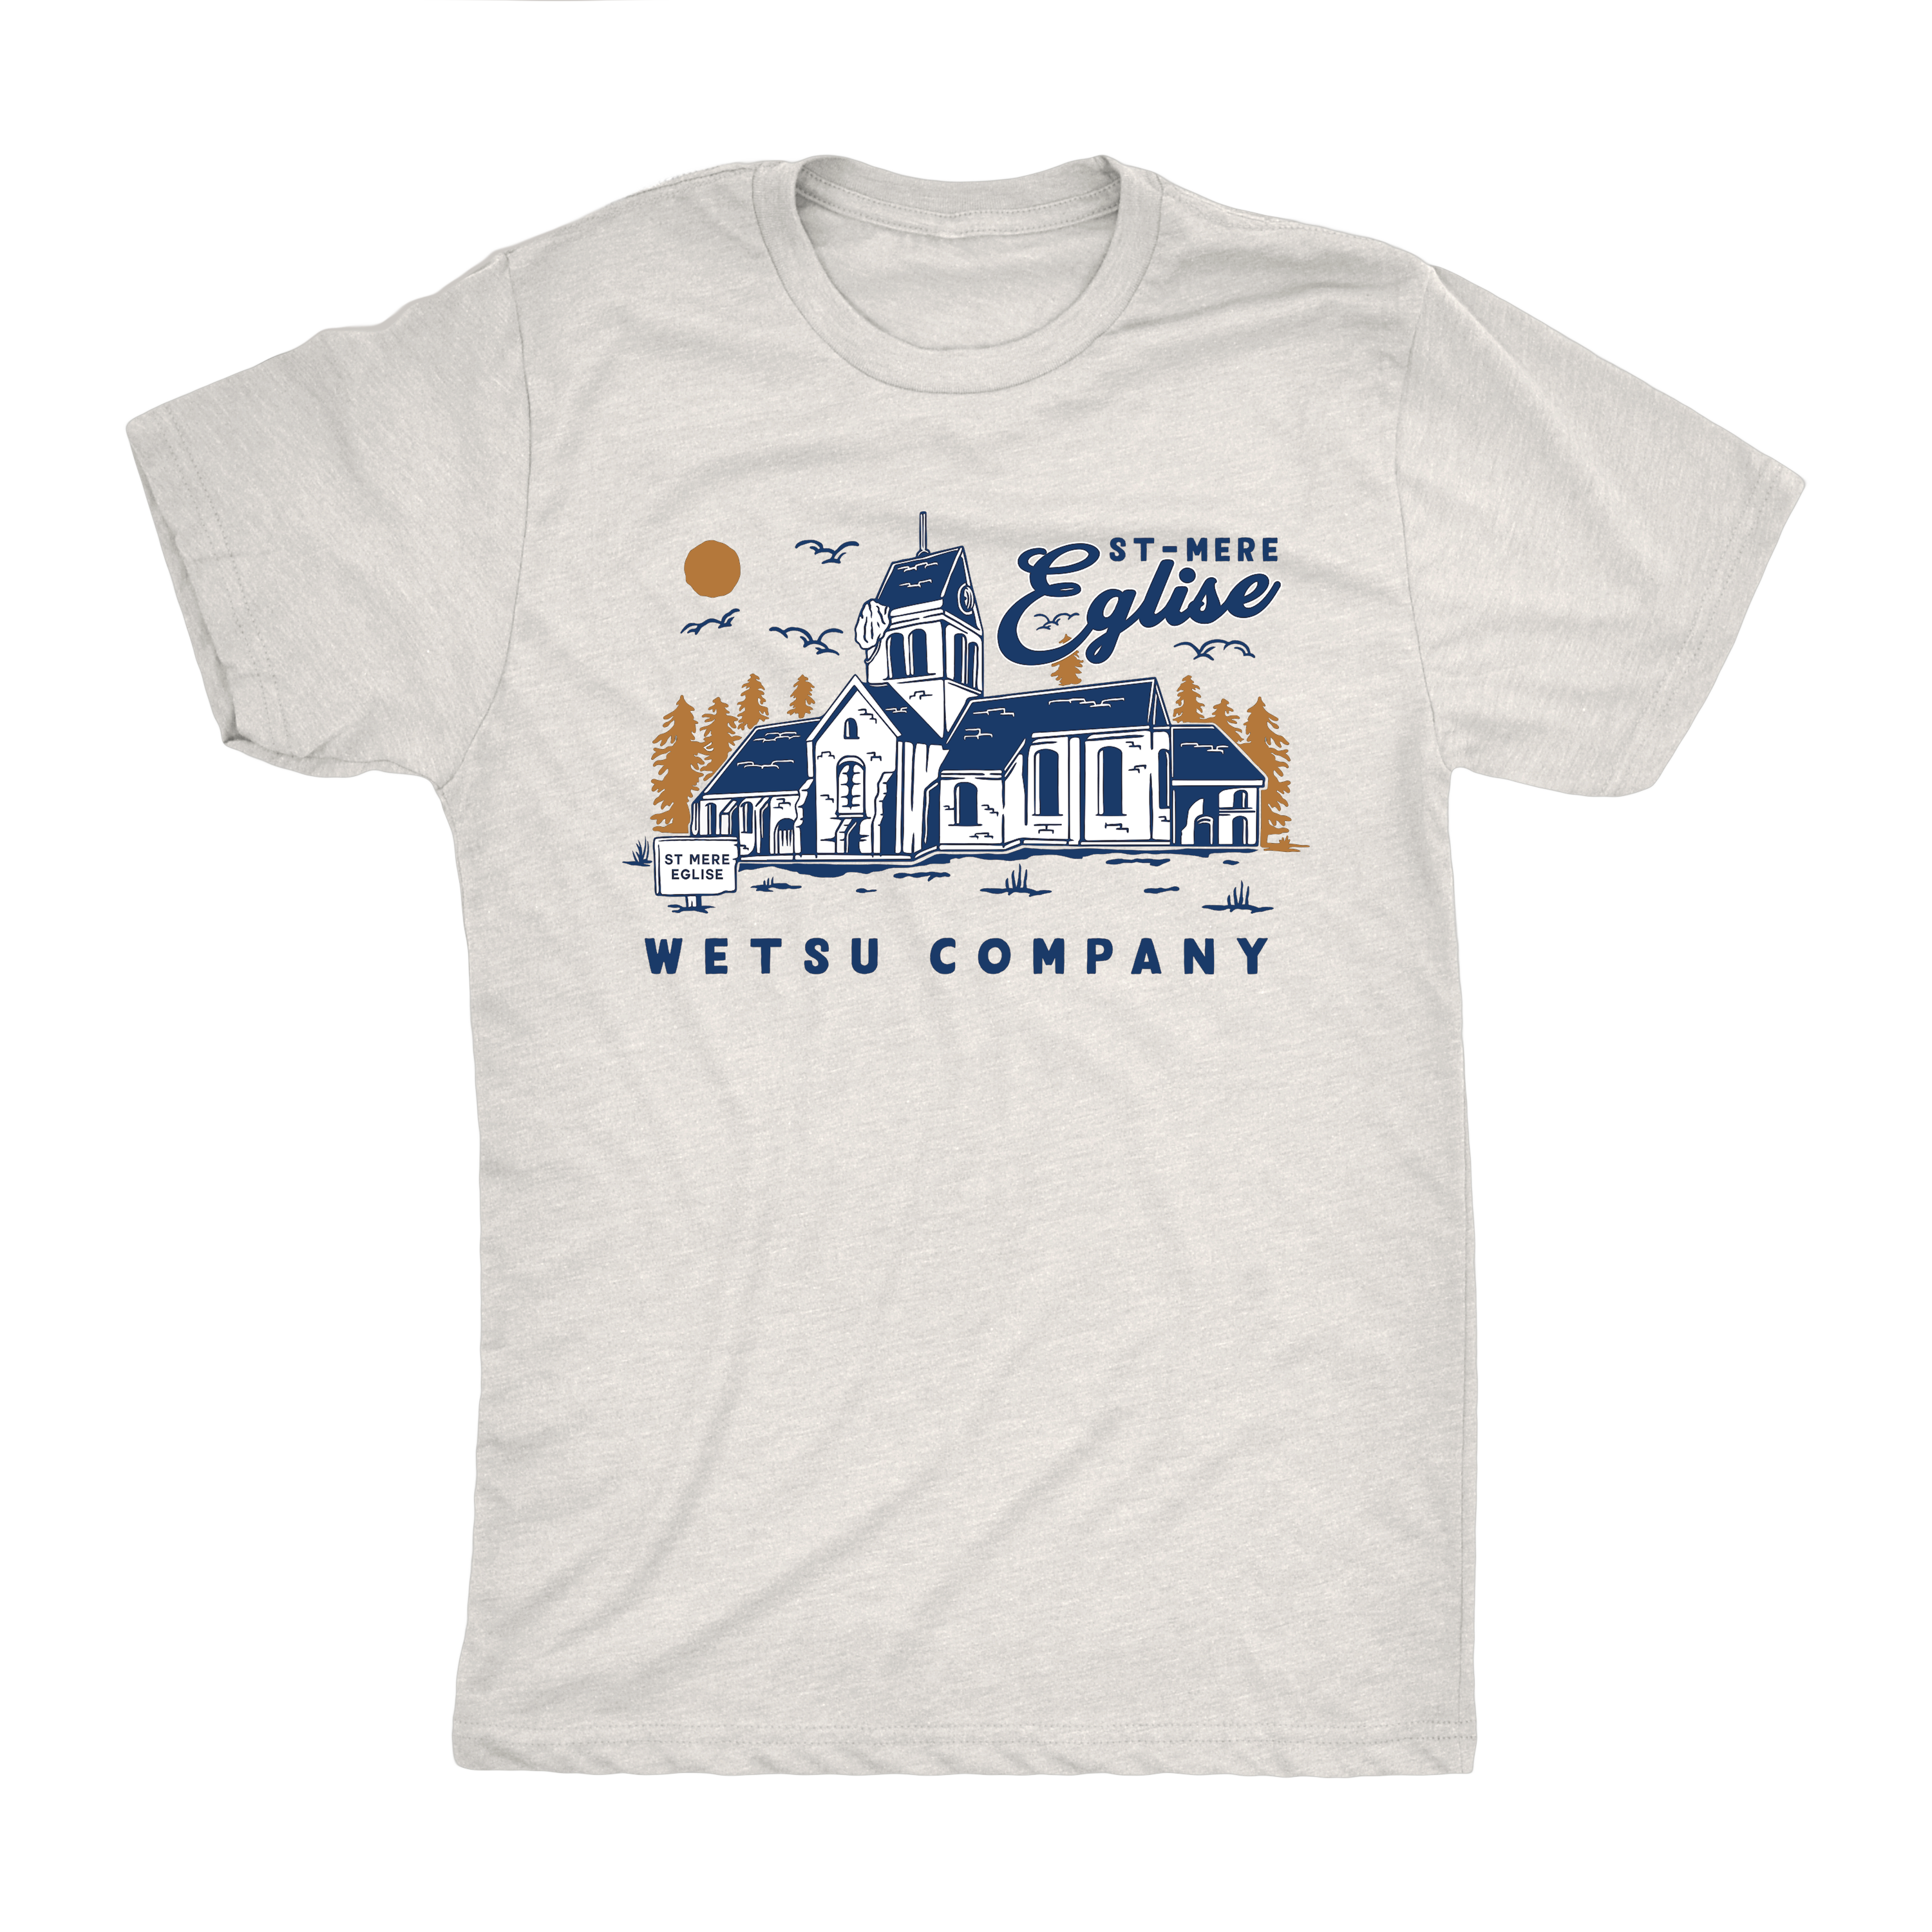 St Mere Eglise Shirt – WETSU Company